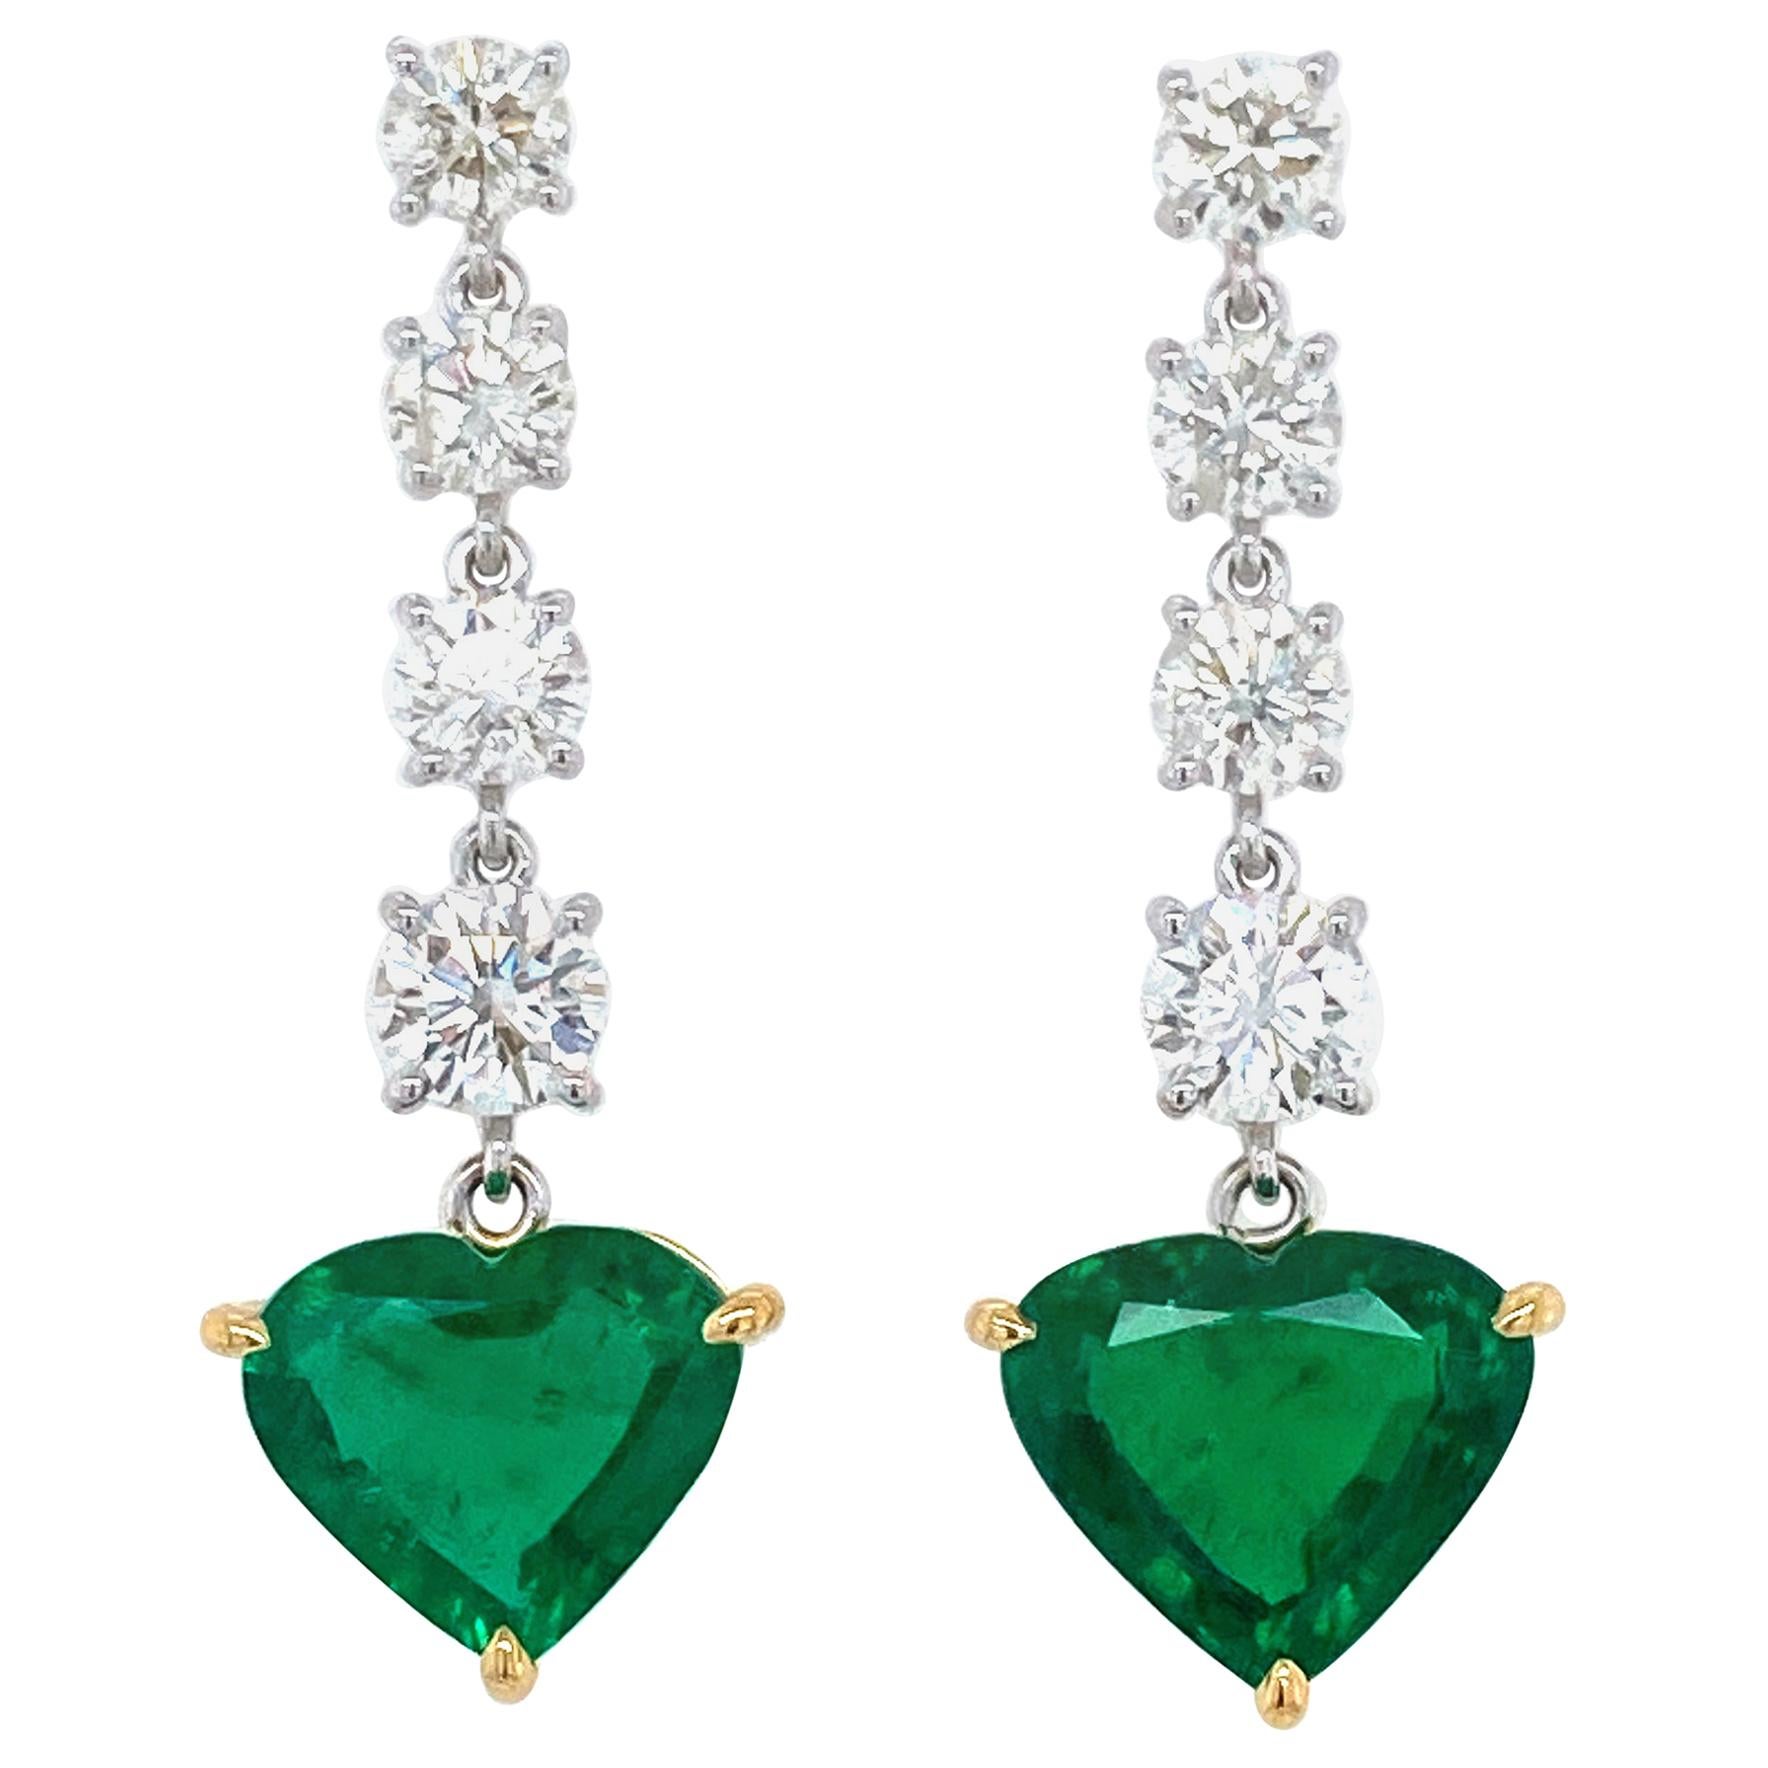 5,19 Karat GRS-zertifizierter Vivid Green No Oil Smaragd und Diamant-Ohrringe